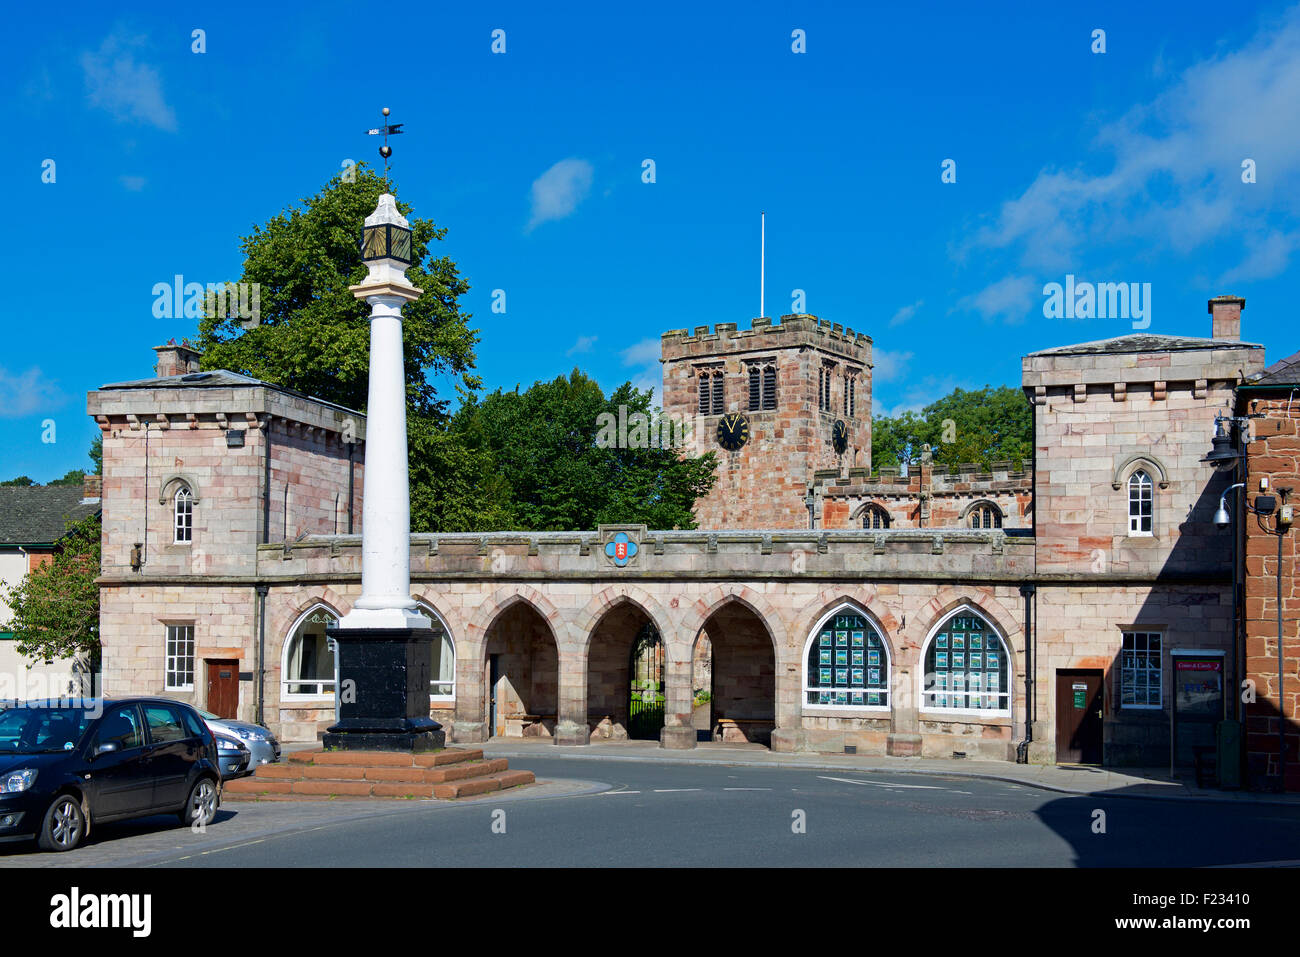 Boroughgate and St Lawrence's Church, Appleby, Cumbria, England UK Stock Photo